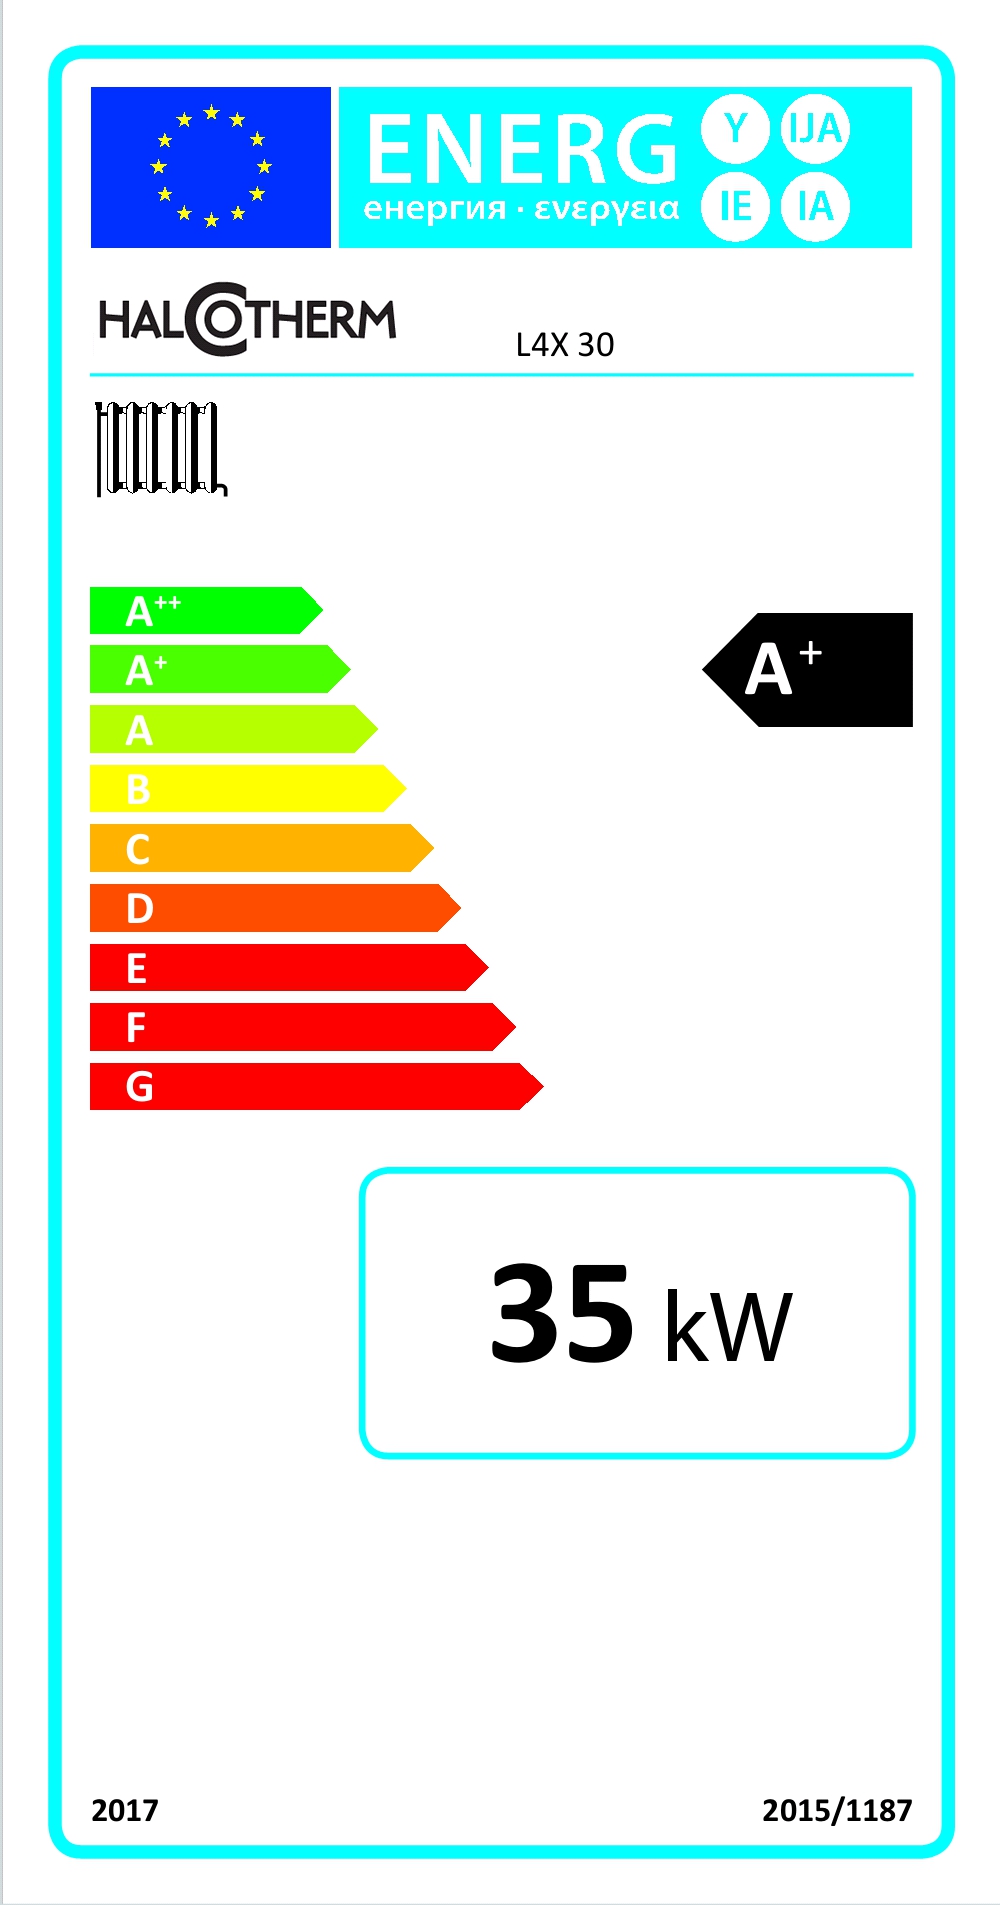 Energy Label L4X30